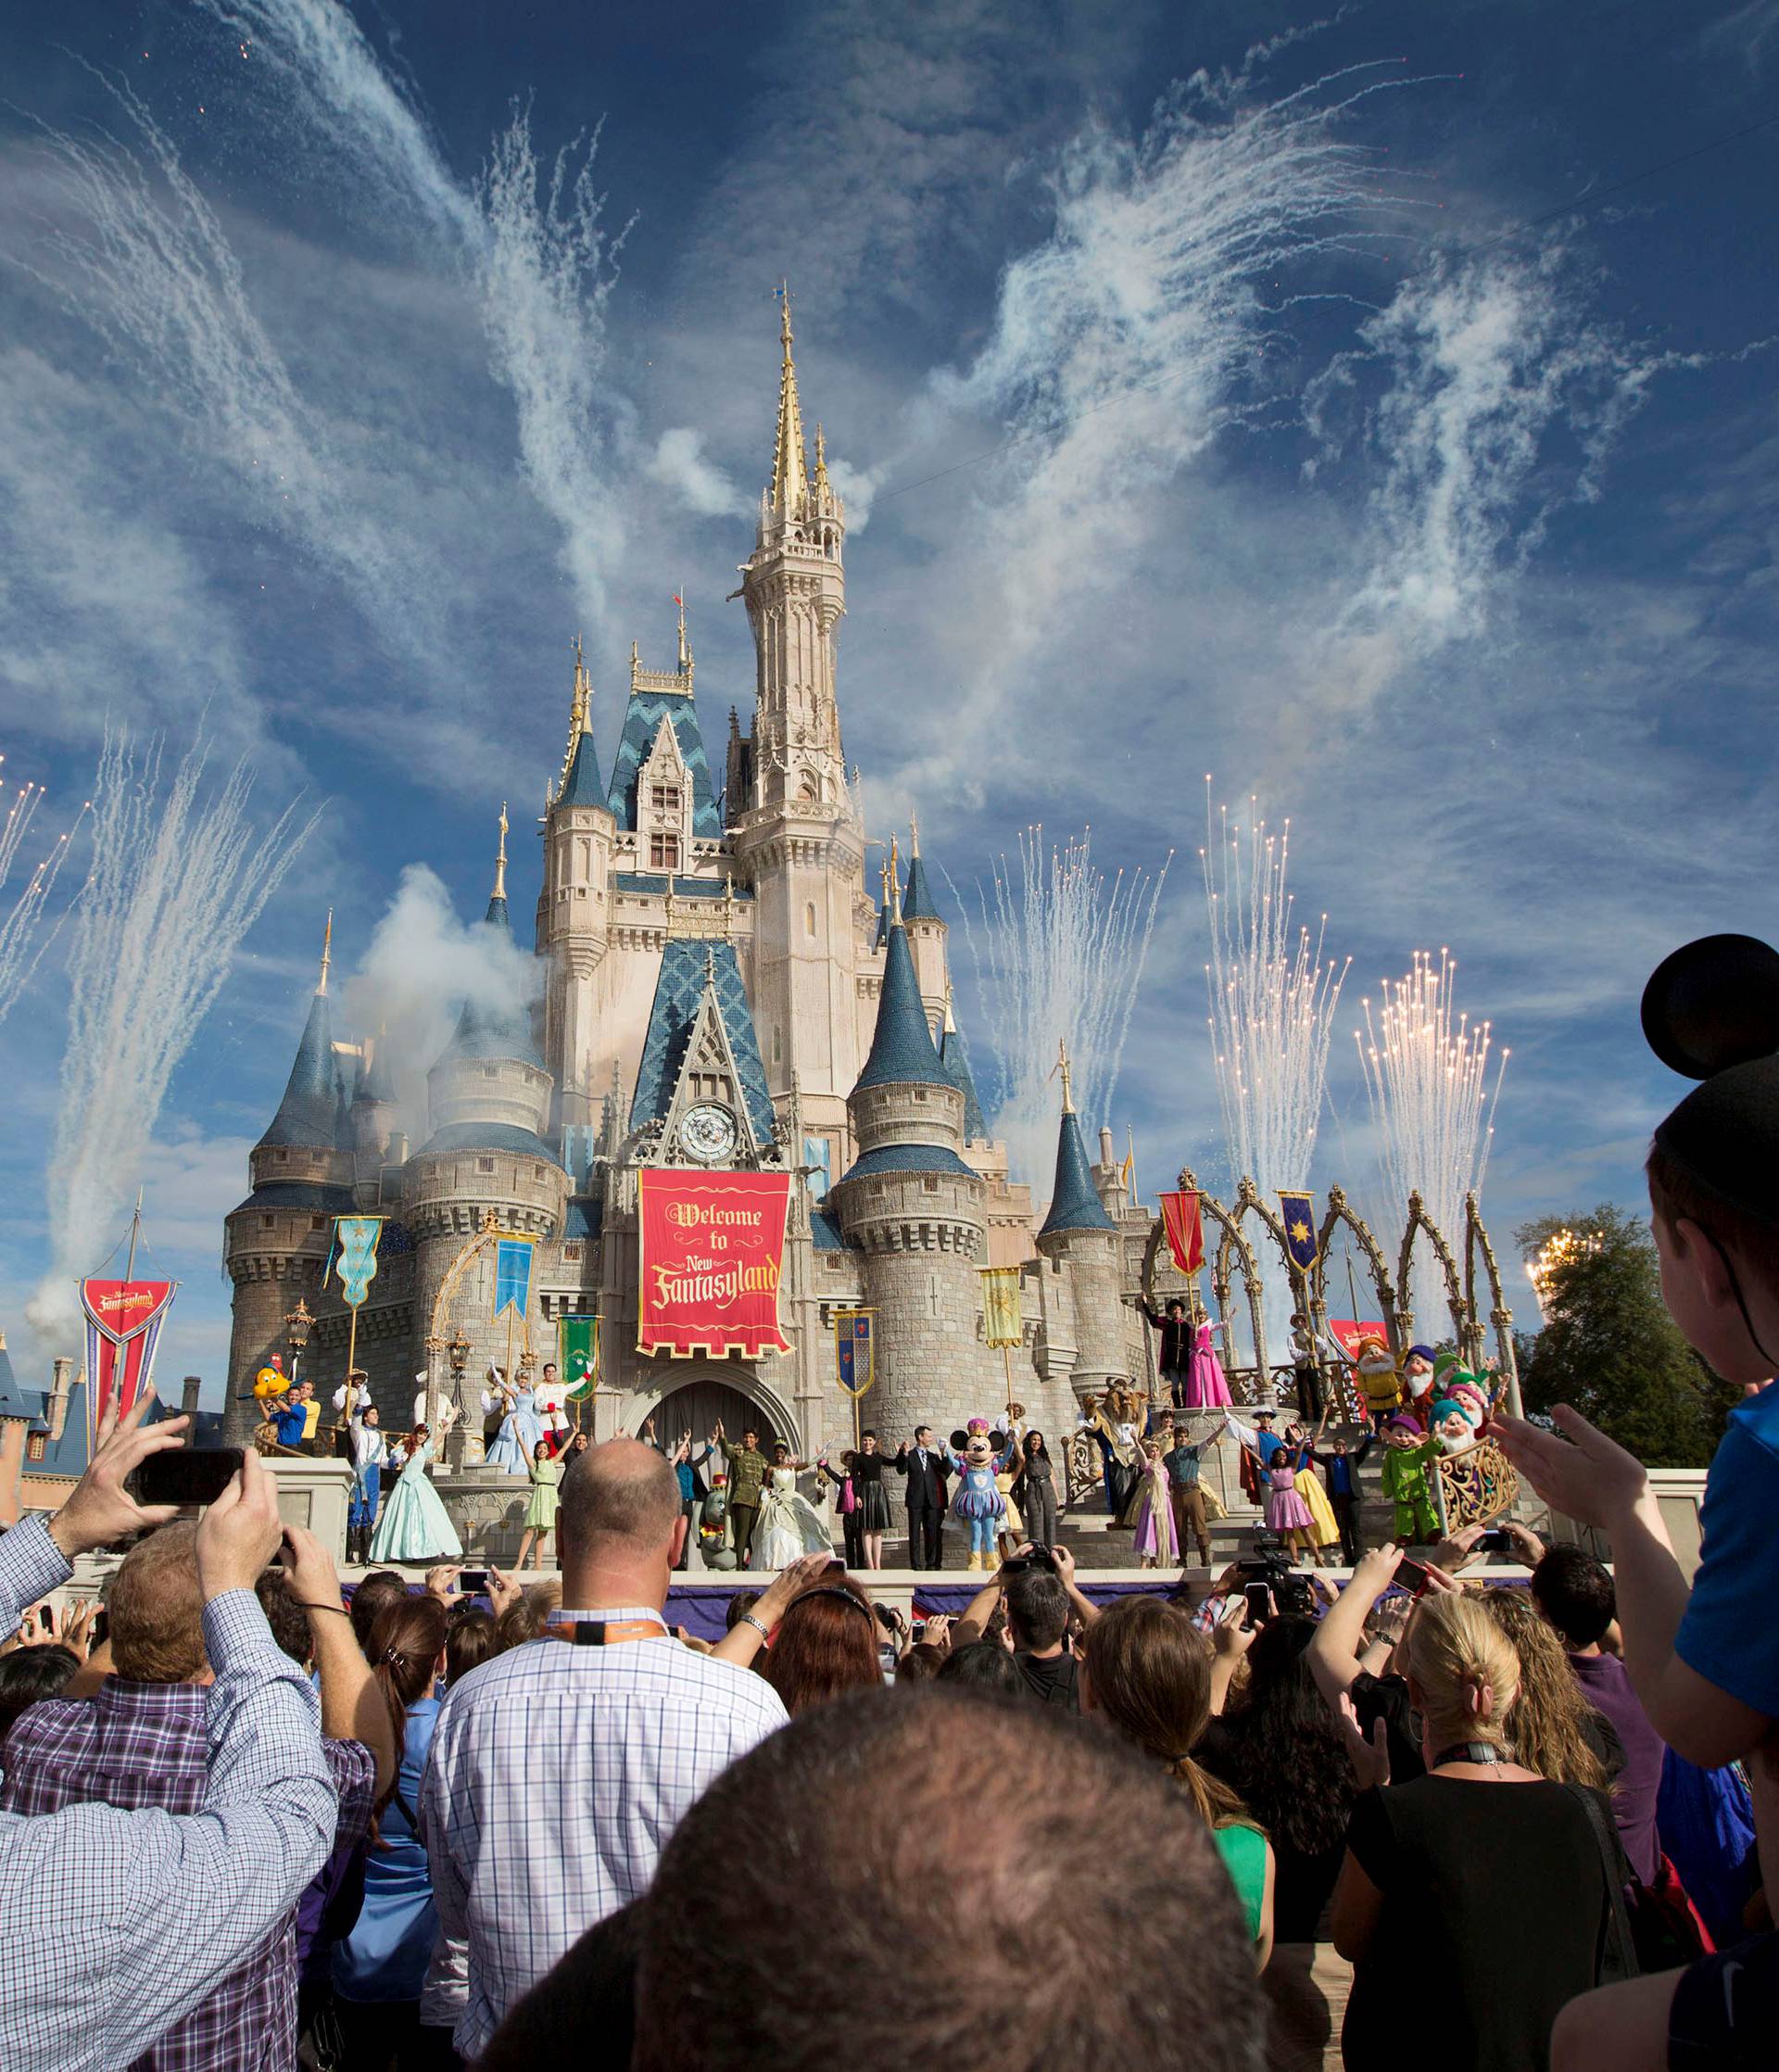 FILE PHOTO: Fireworks go off around Cinderella's castle during the grand opening ceremony for Walt Disney World's new Fantasyland in Lake Buena Vista, Florida